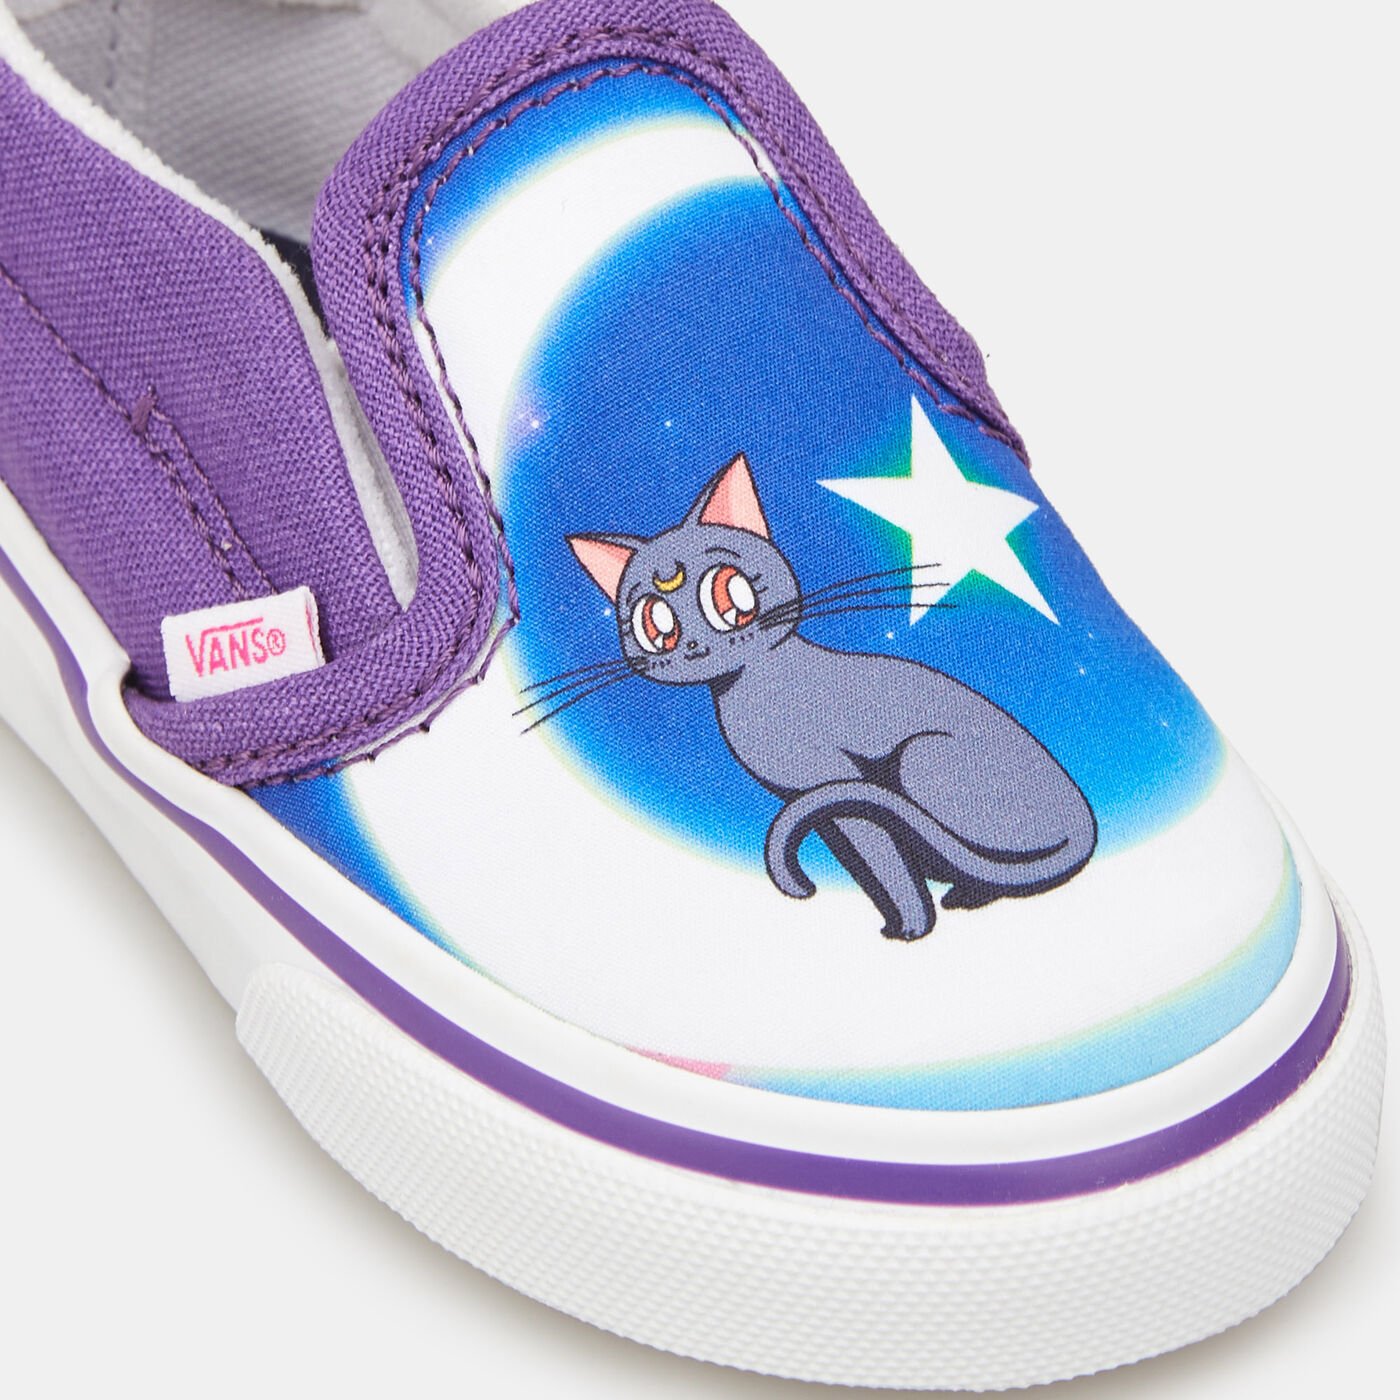 Kids' x Pretty Guardian Sailor Moon Slip-On Shoe (Toddler)